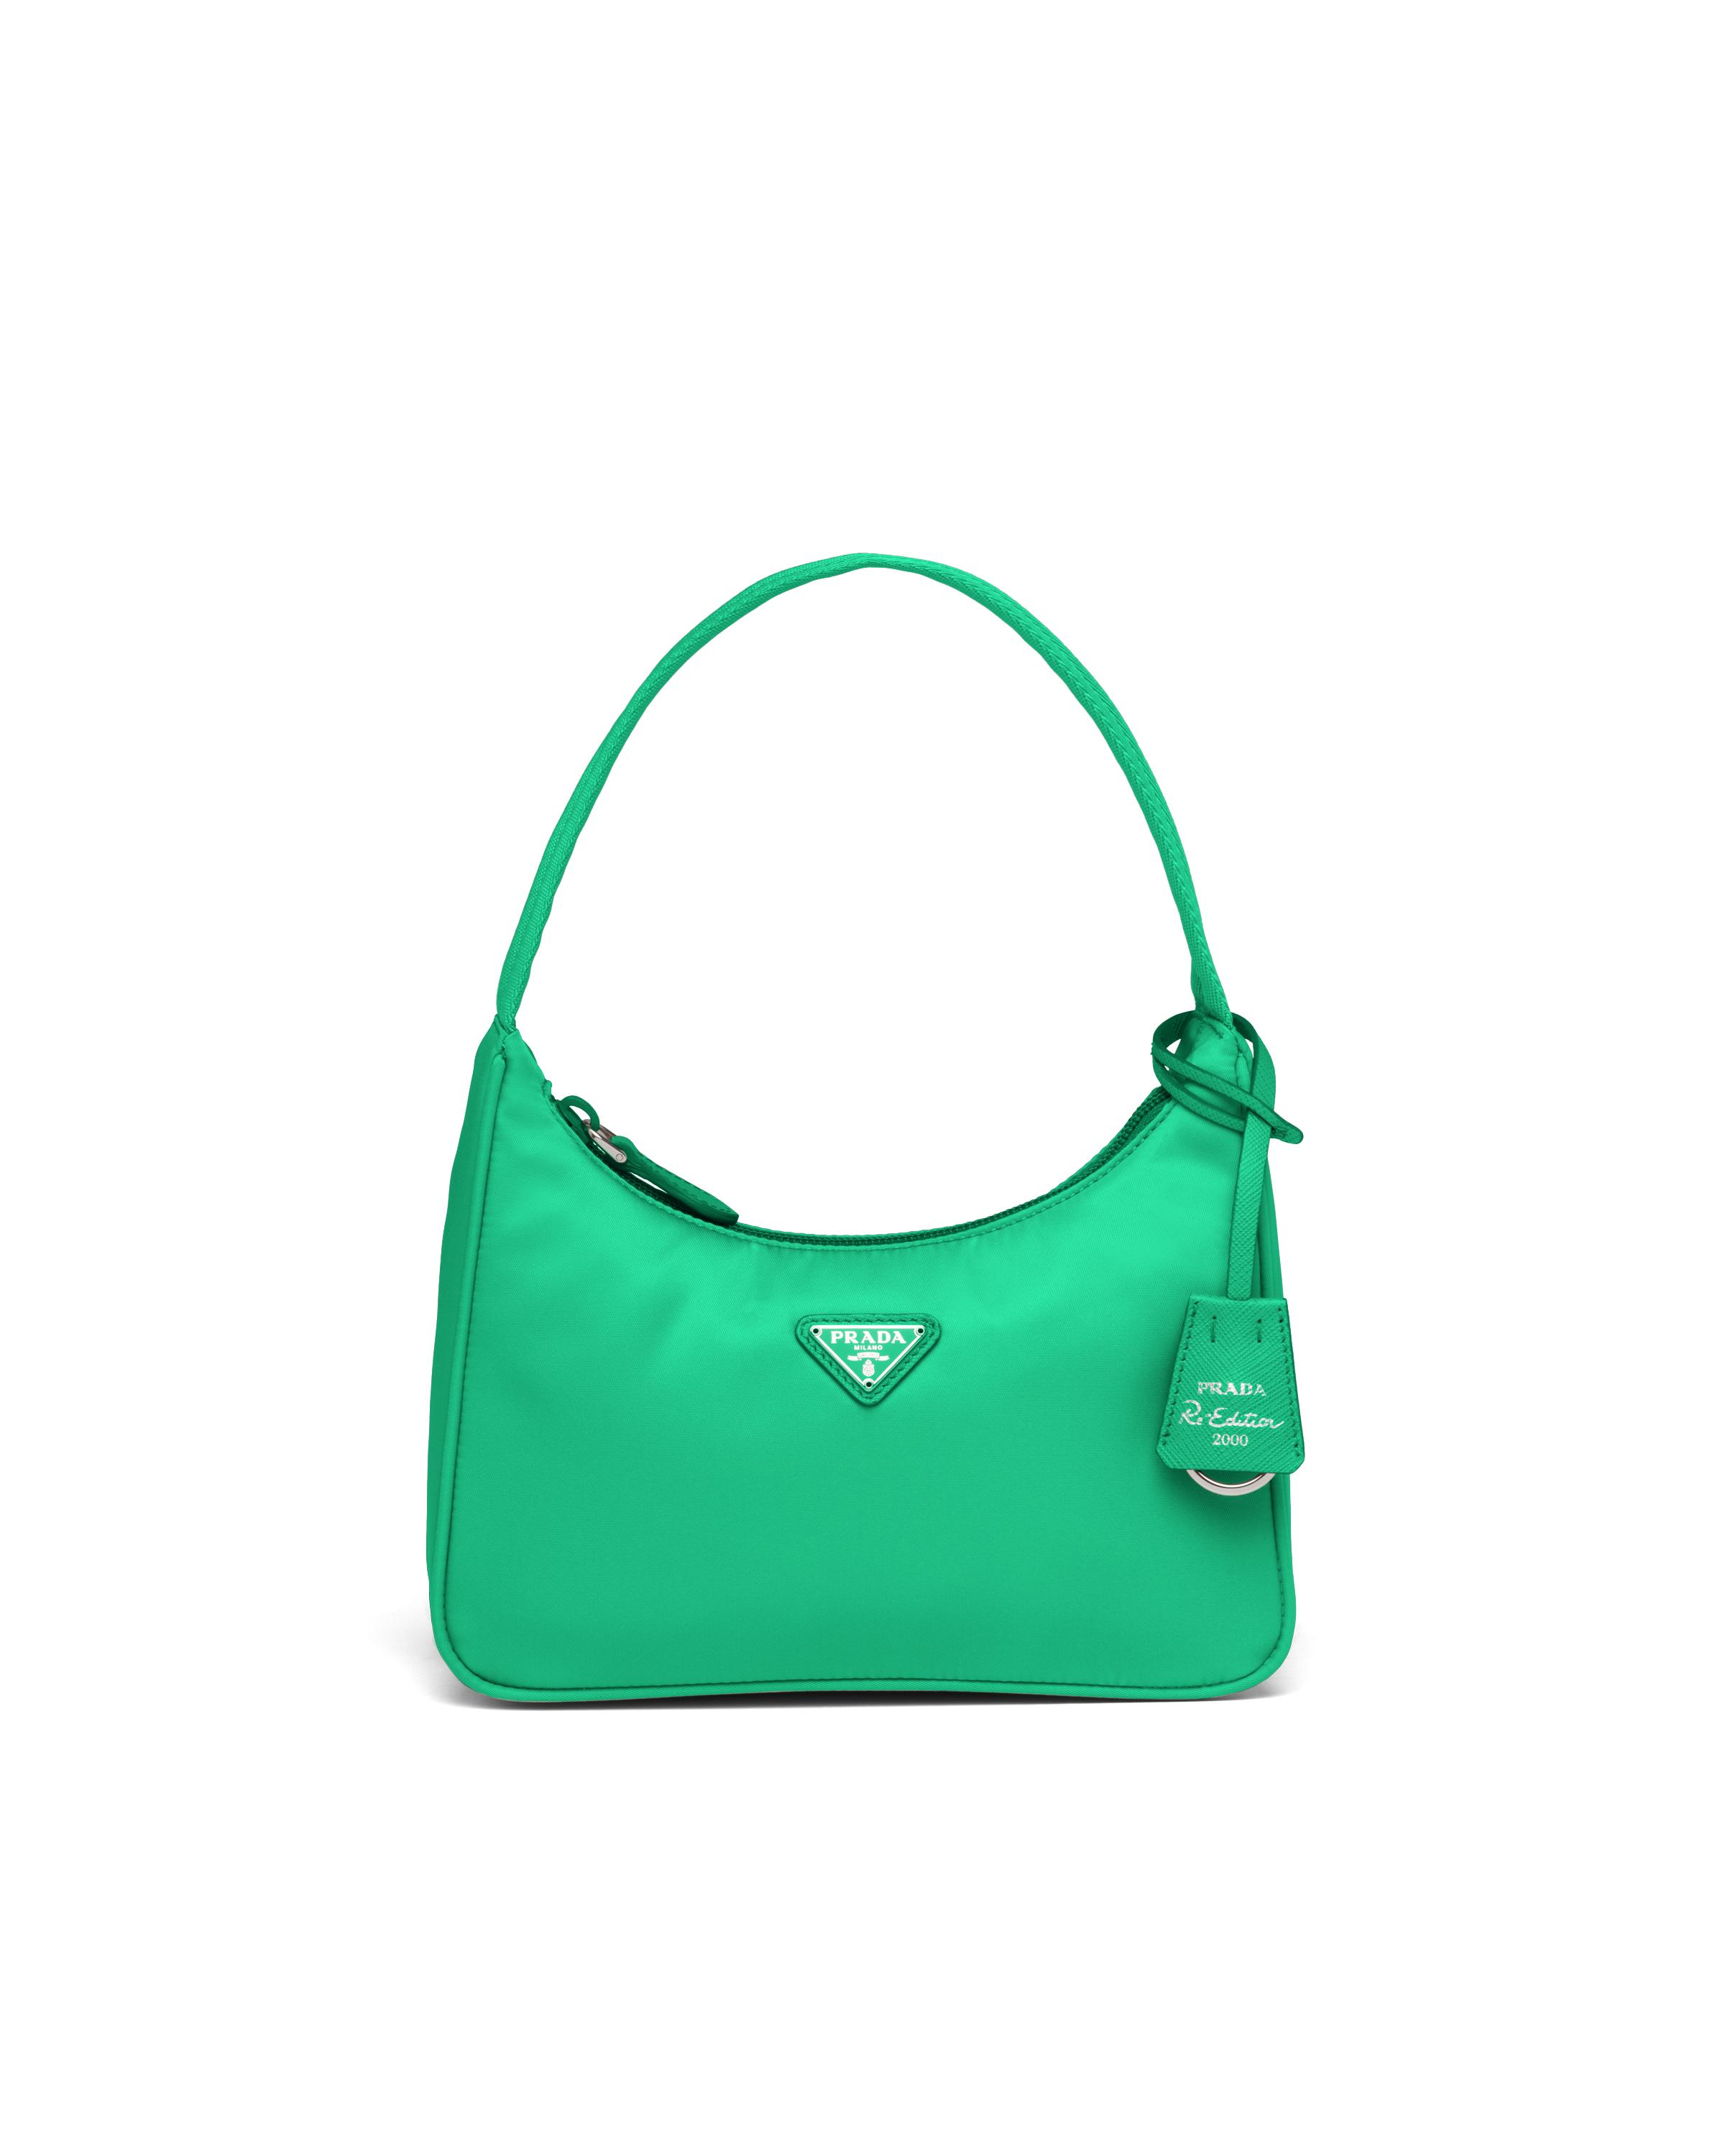 Prada Re-edition 2000 Nylon Mini Bag in Green | Lyst